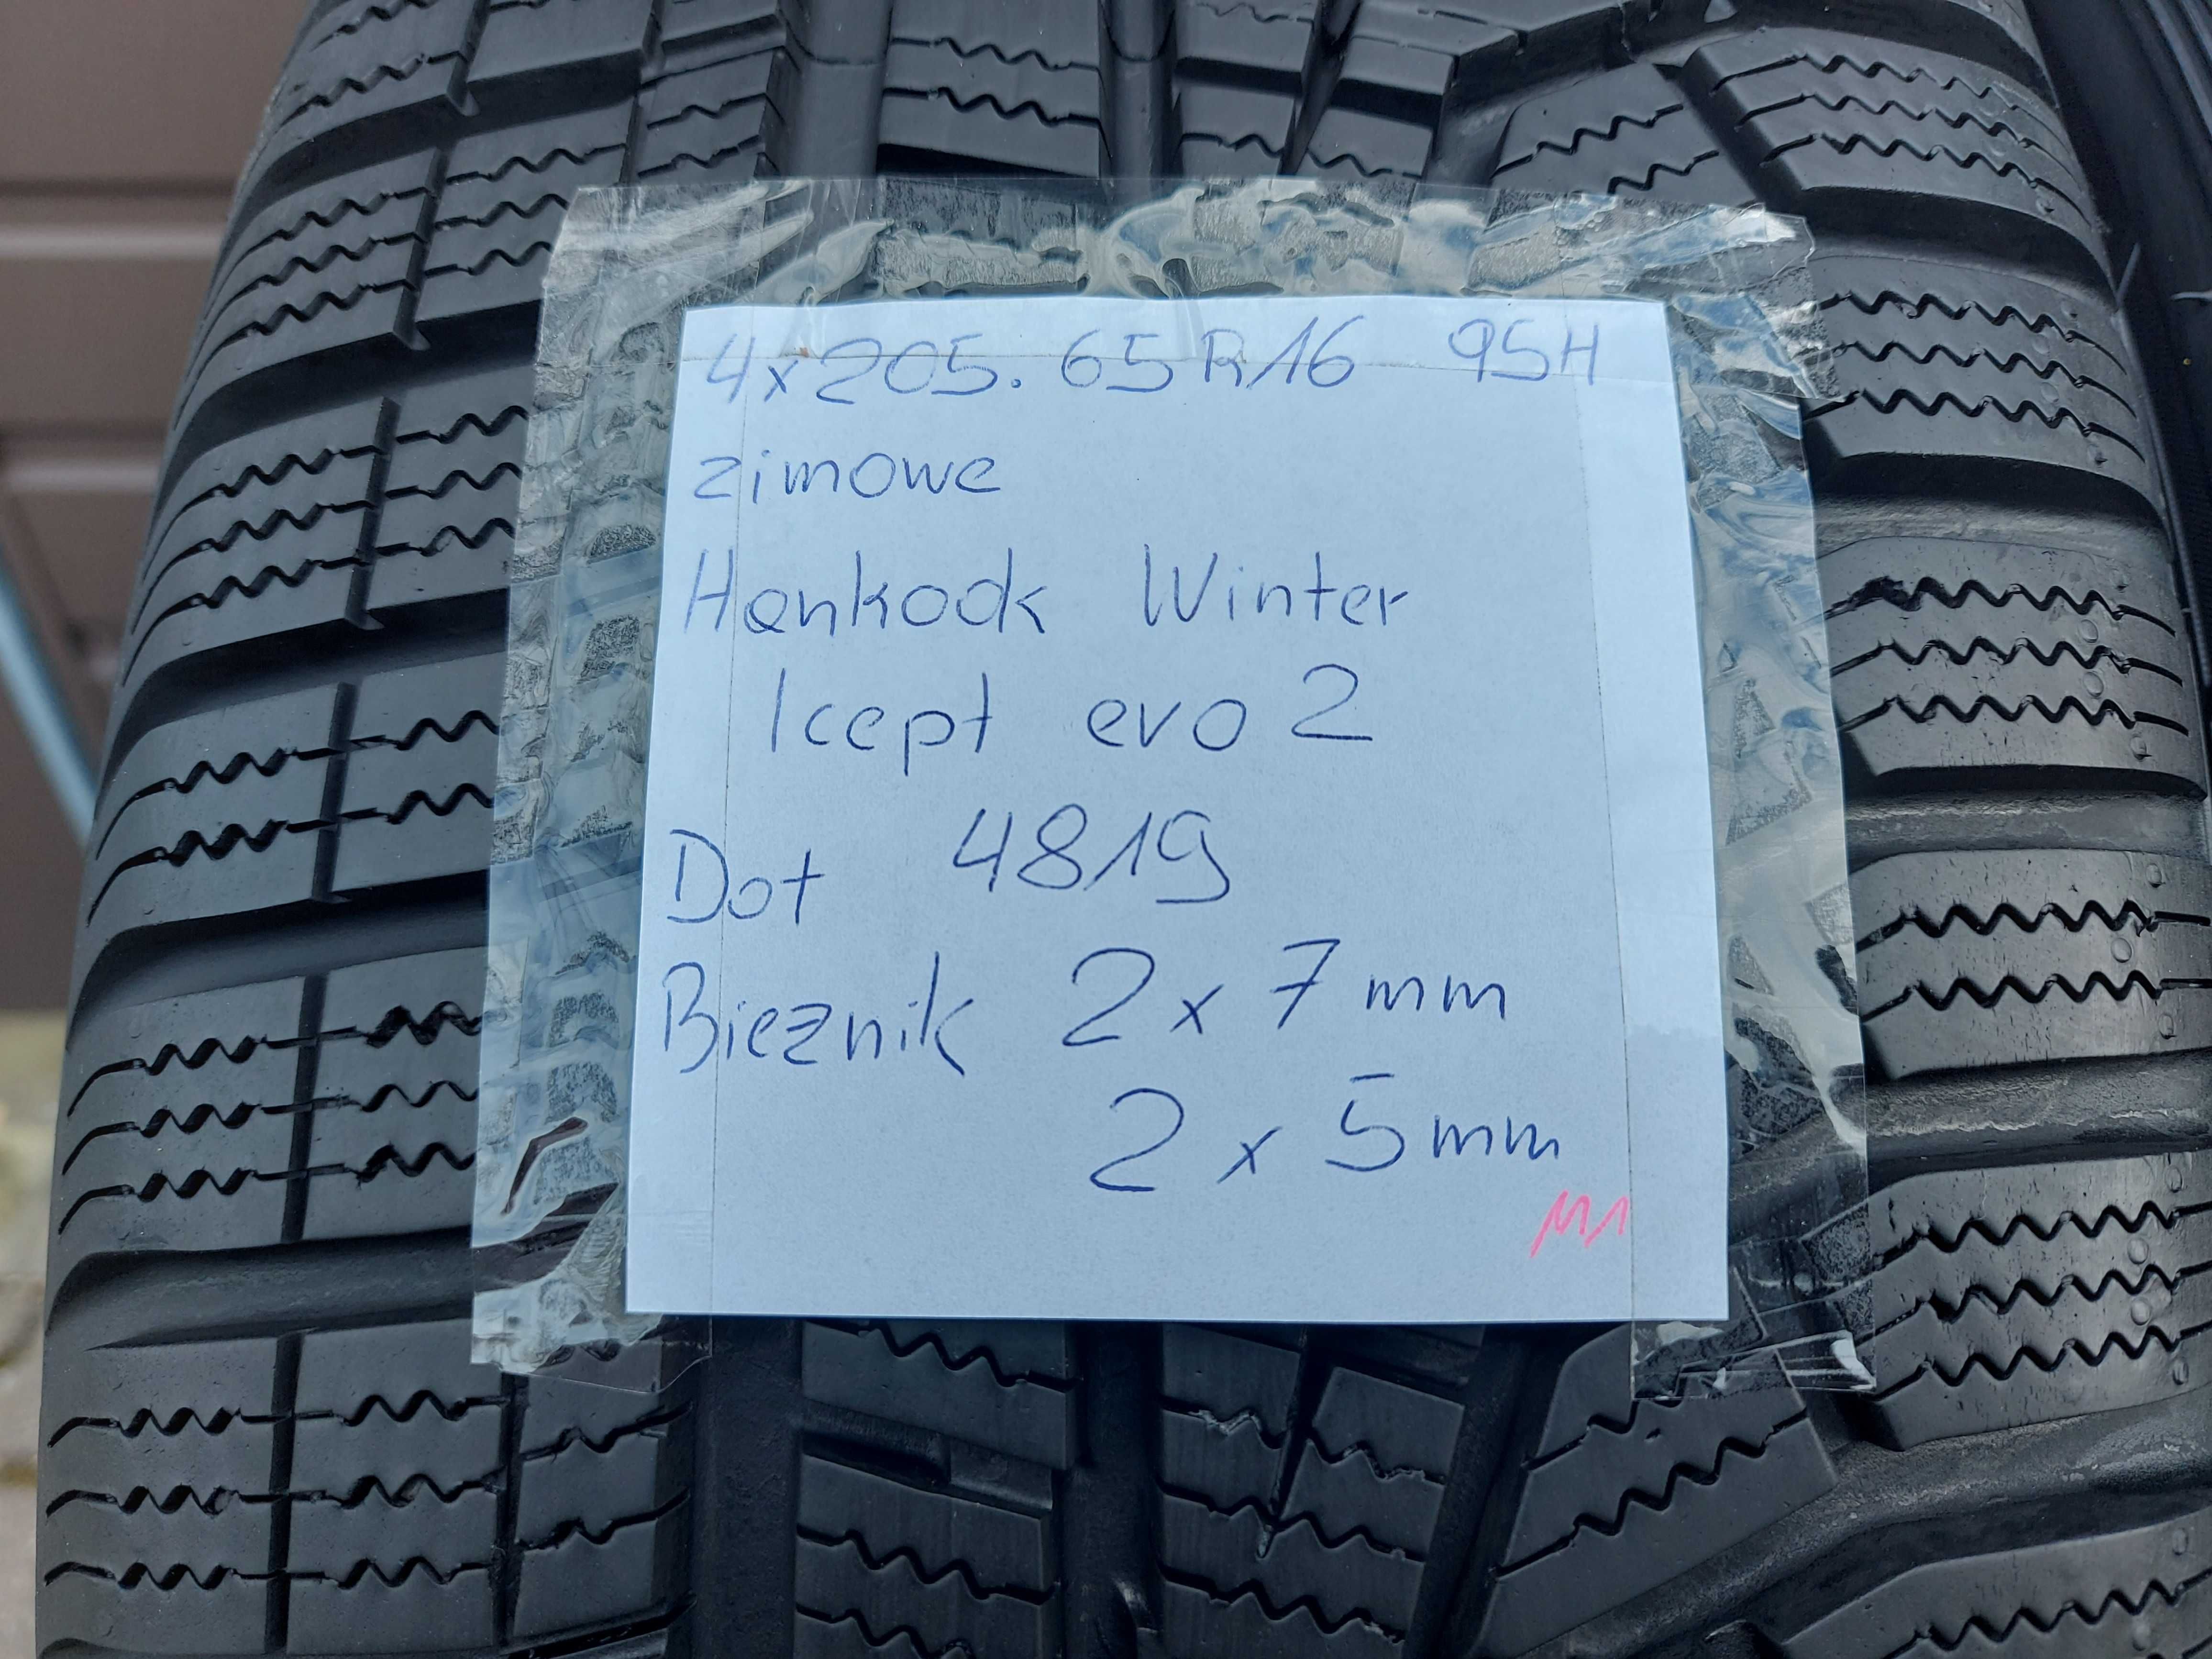 Opony 205/65R16 95H Hankook Winter Icept evo2 2019r.